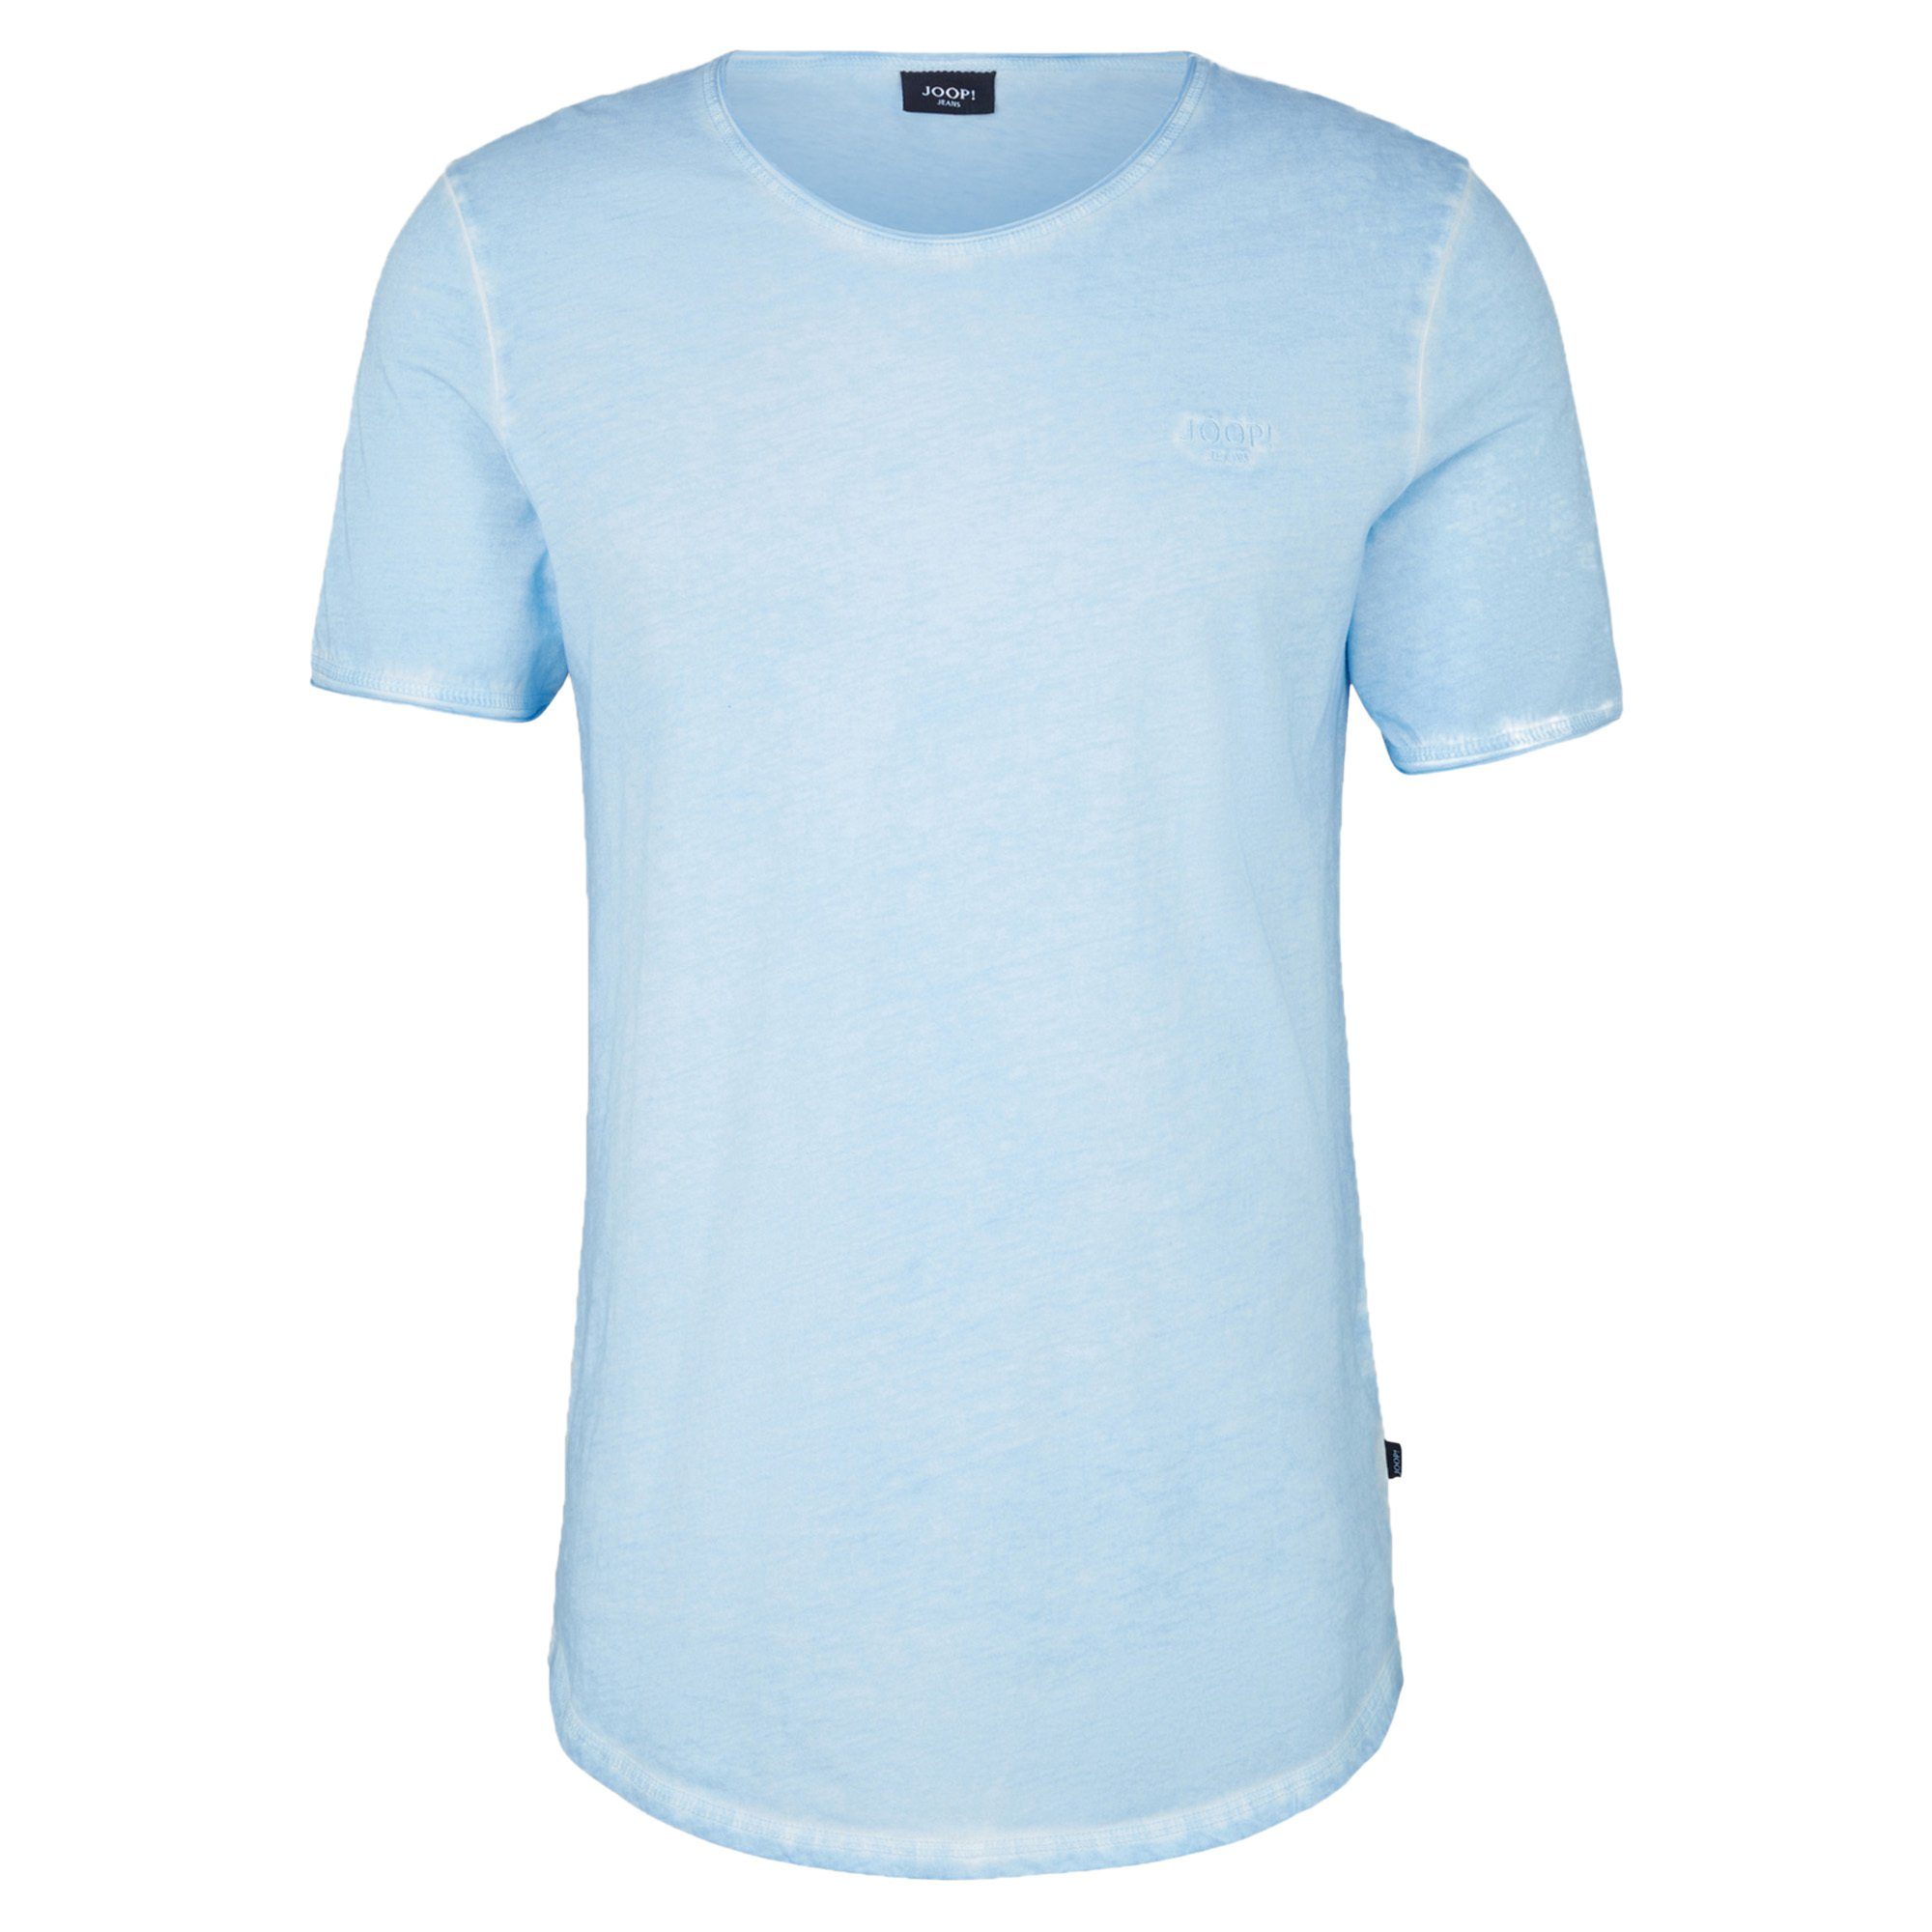 Joop Herren - T-Shirt Rundhals, Jeans T-Shirt JJJ-06Clark, Hellblau Halbarm